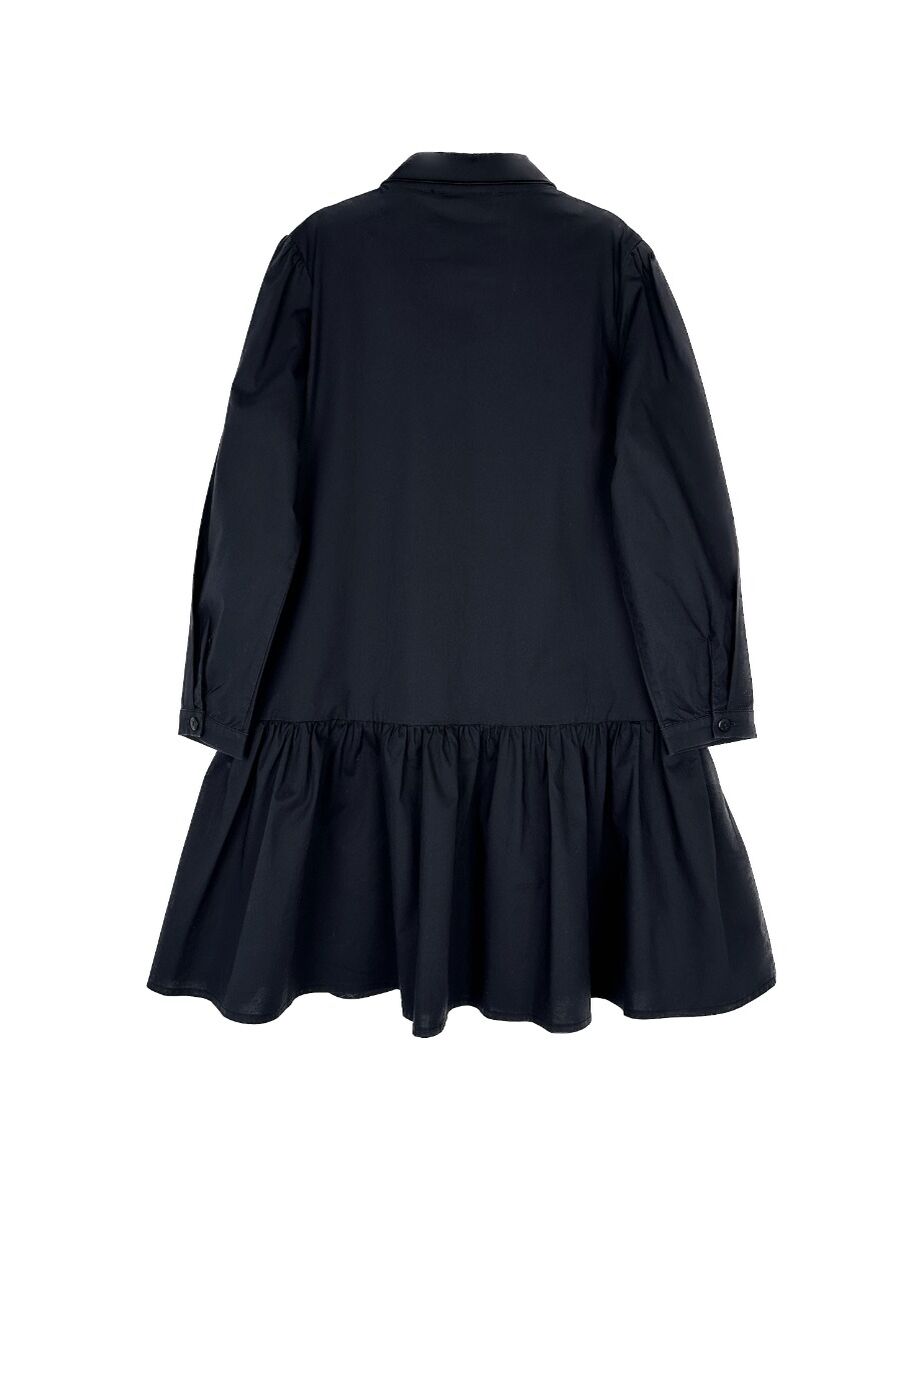 image 2 Детское платье рубашка чёрного цвета